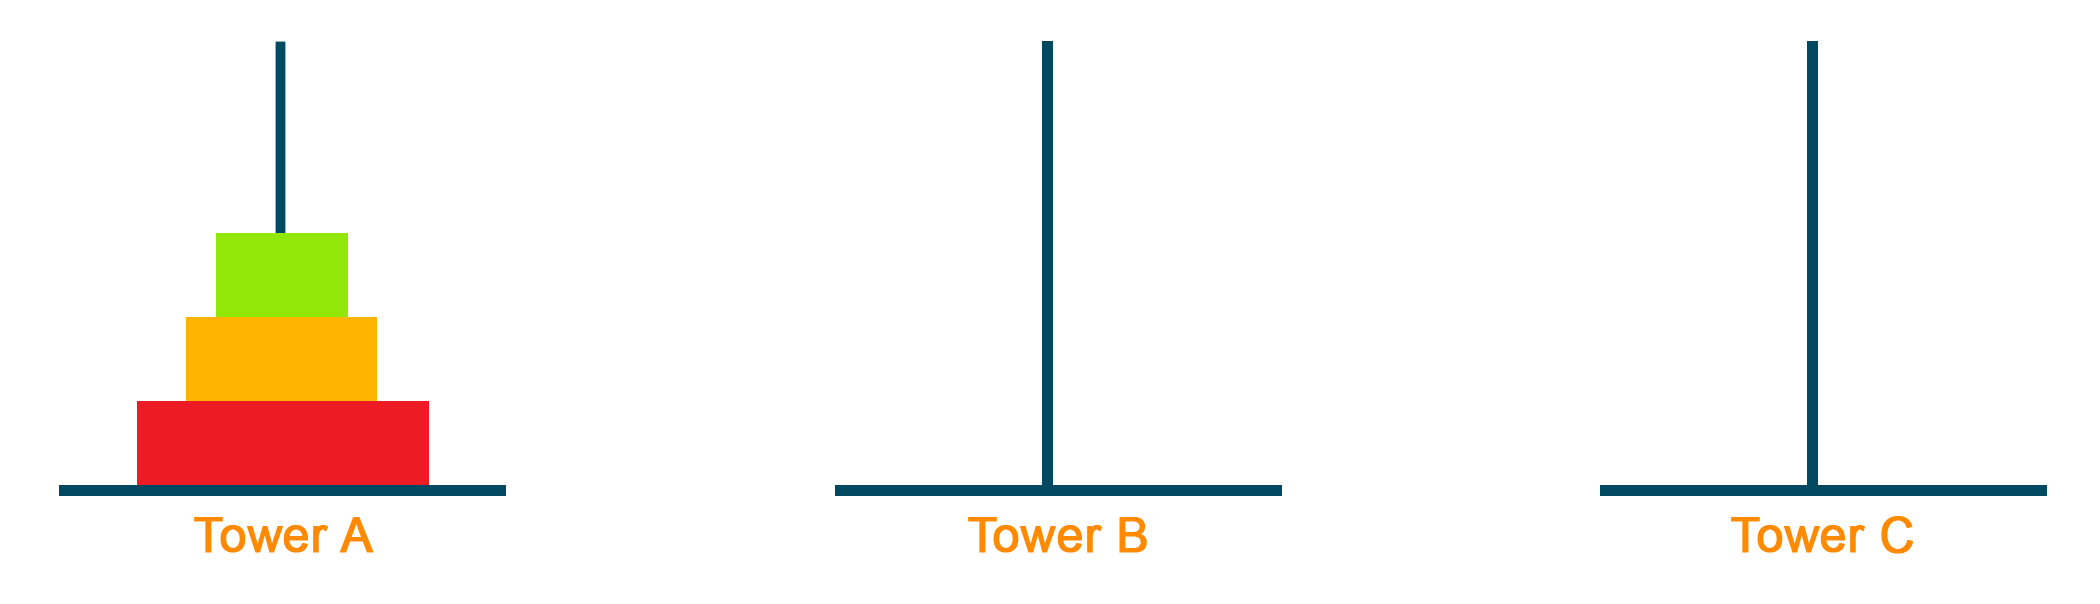 Tower of Hanoi problem example